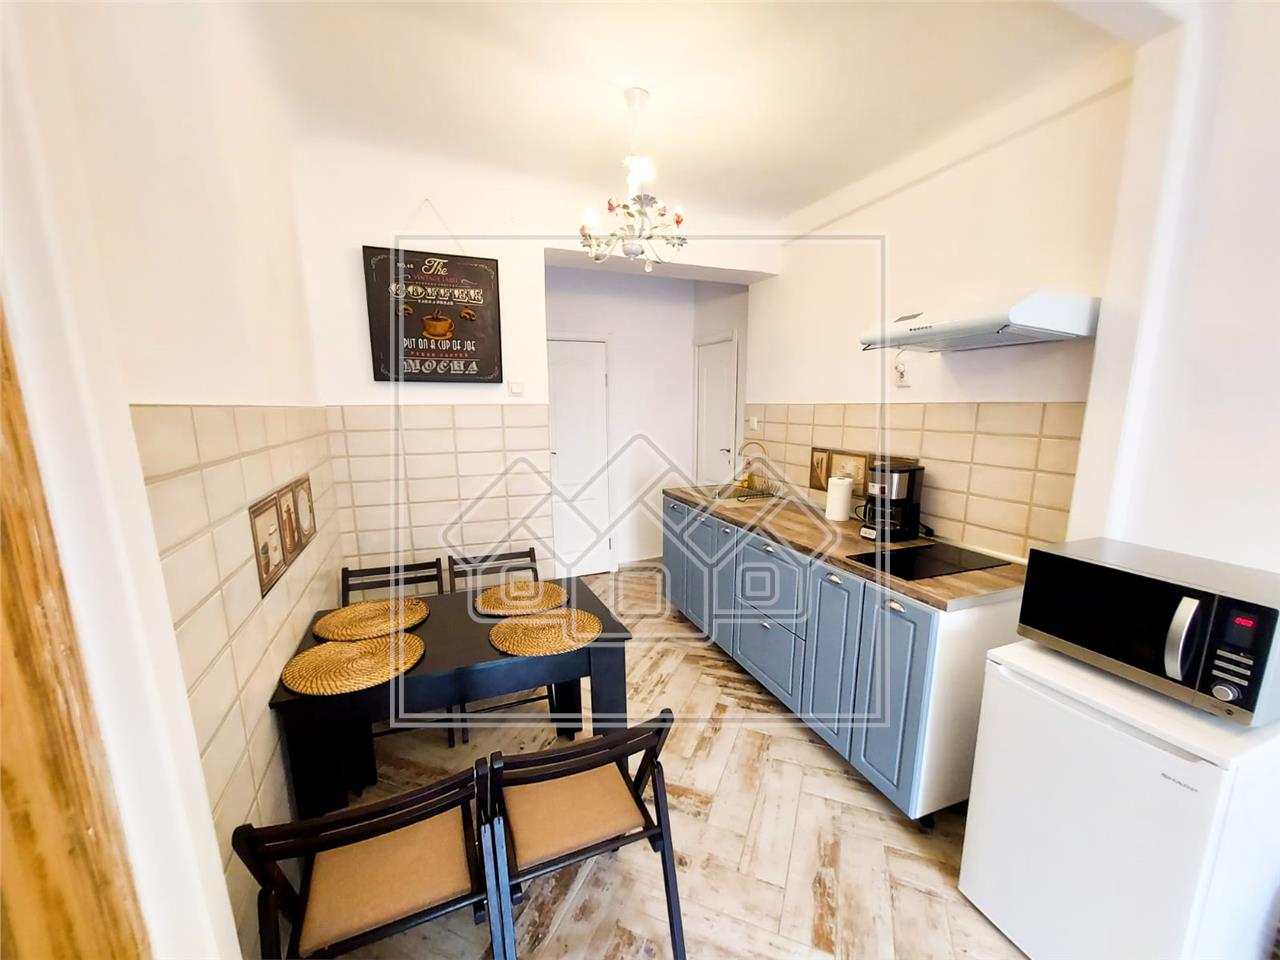 Apartament 3 rooms for sale in Sibiu -  business in hotel regime